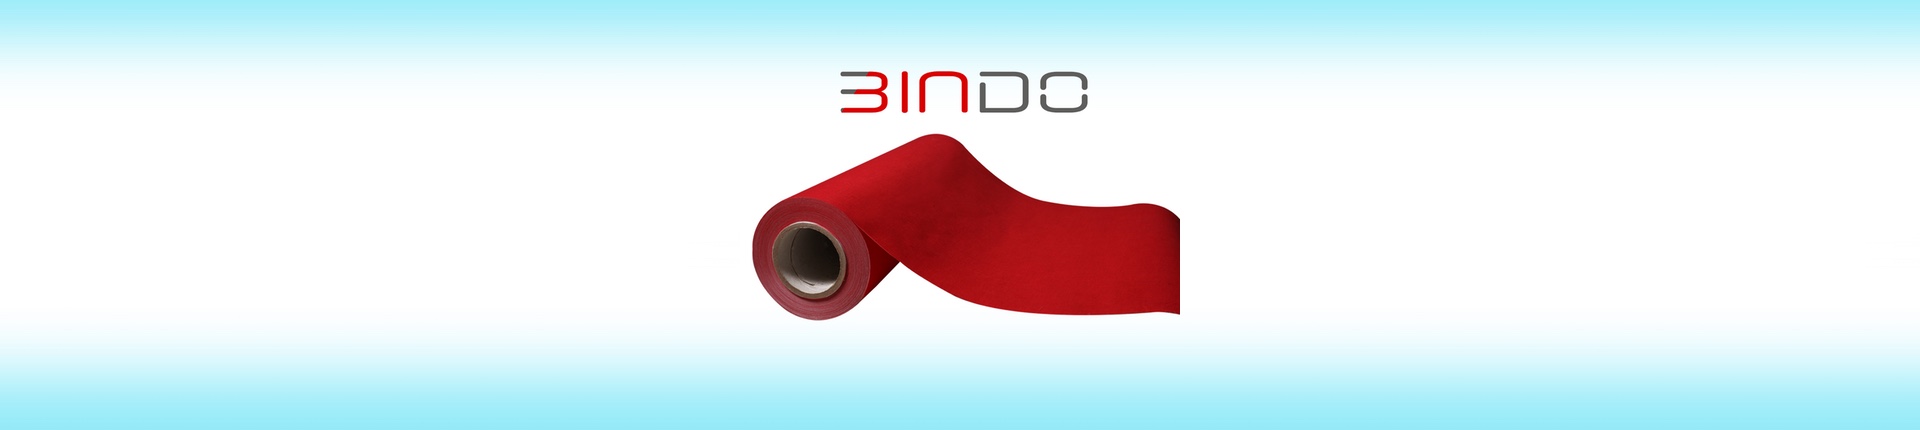 bindo-featured-2